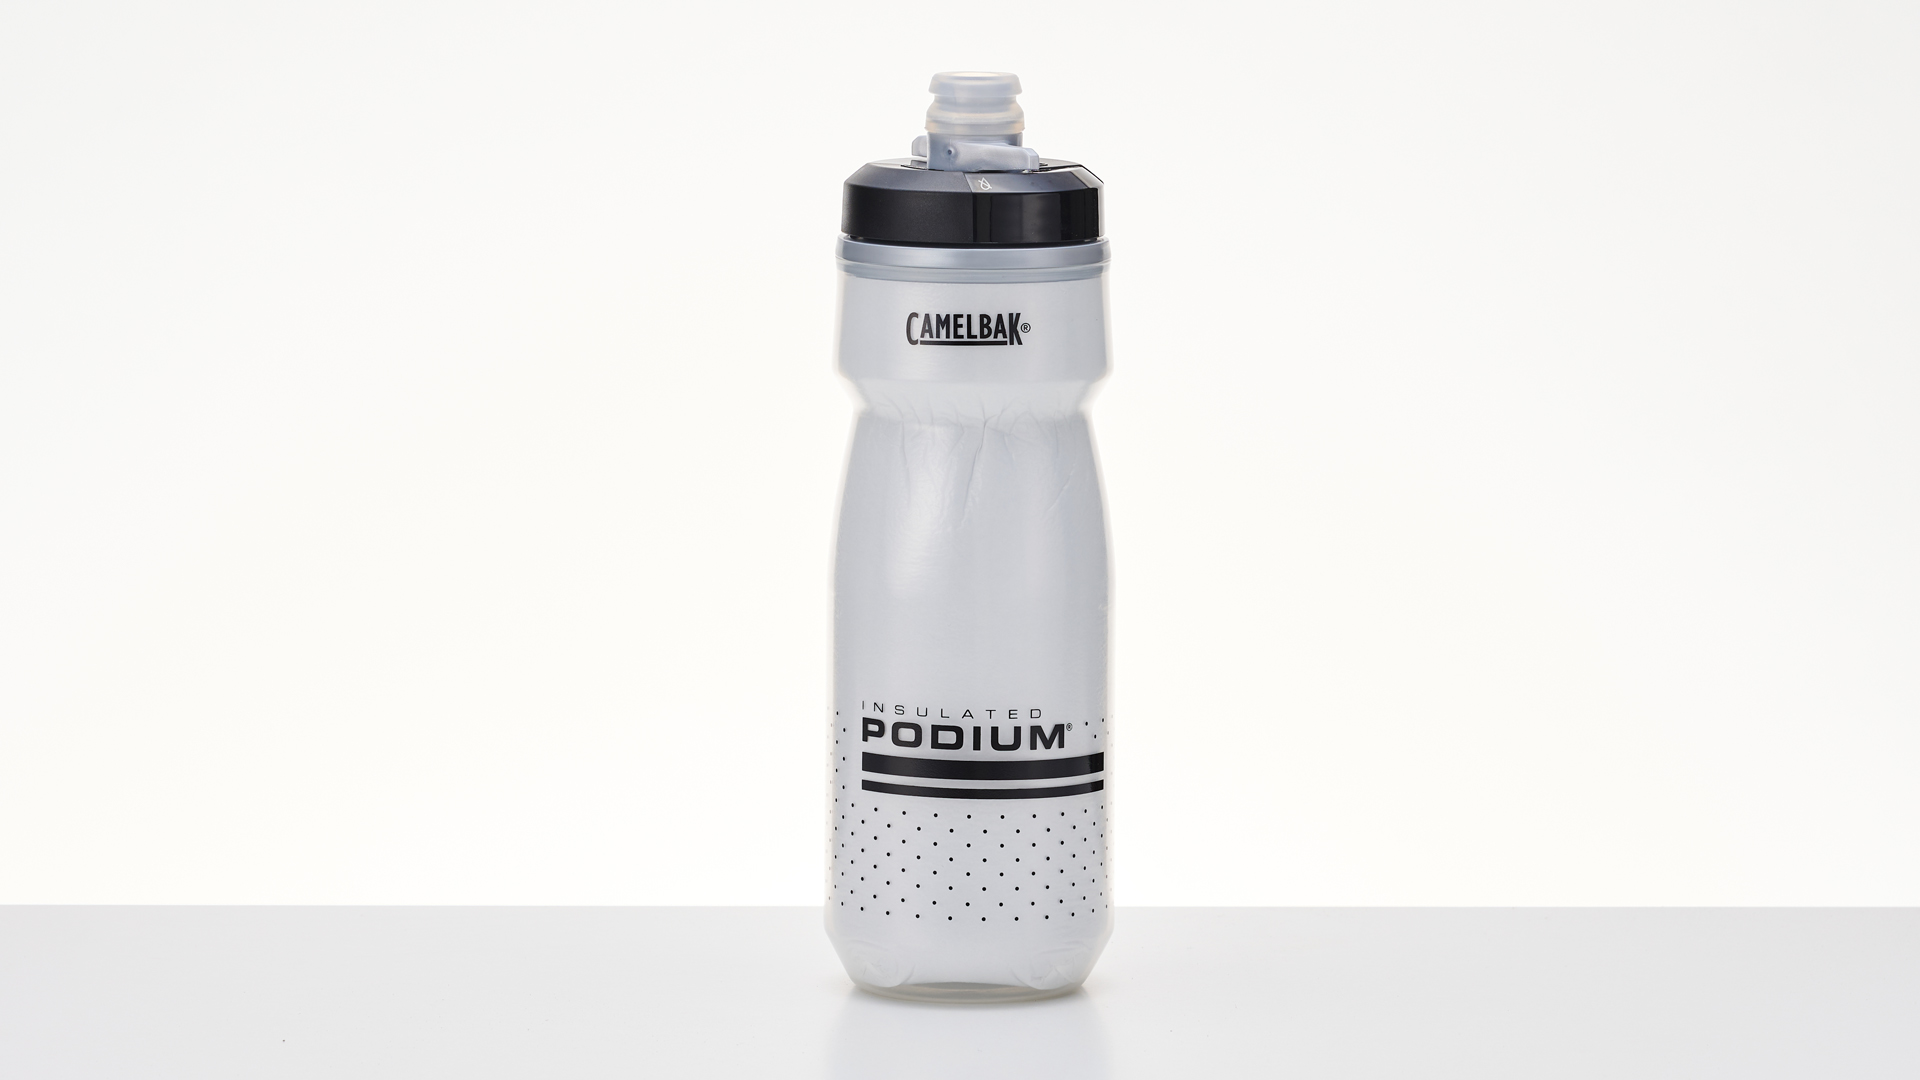 Camelbak Podium water bottle